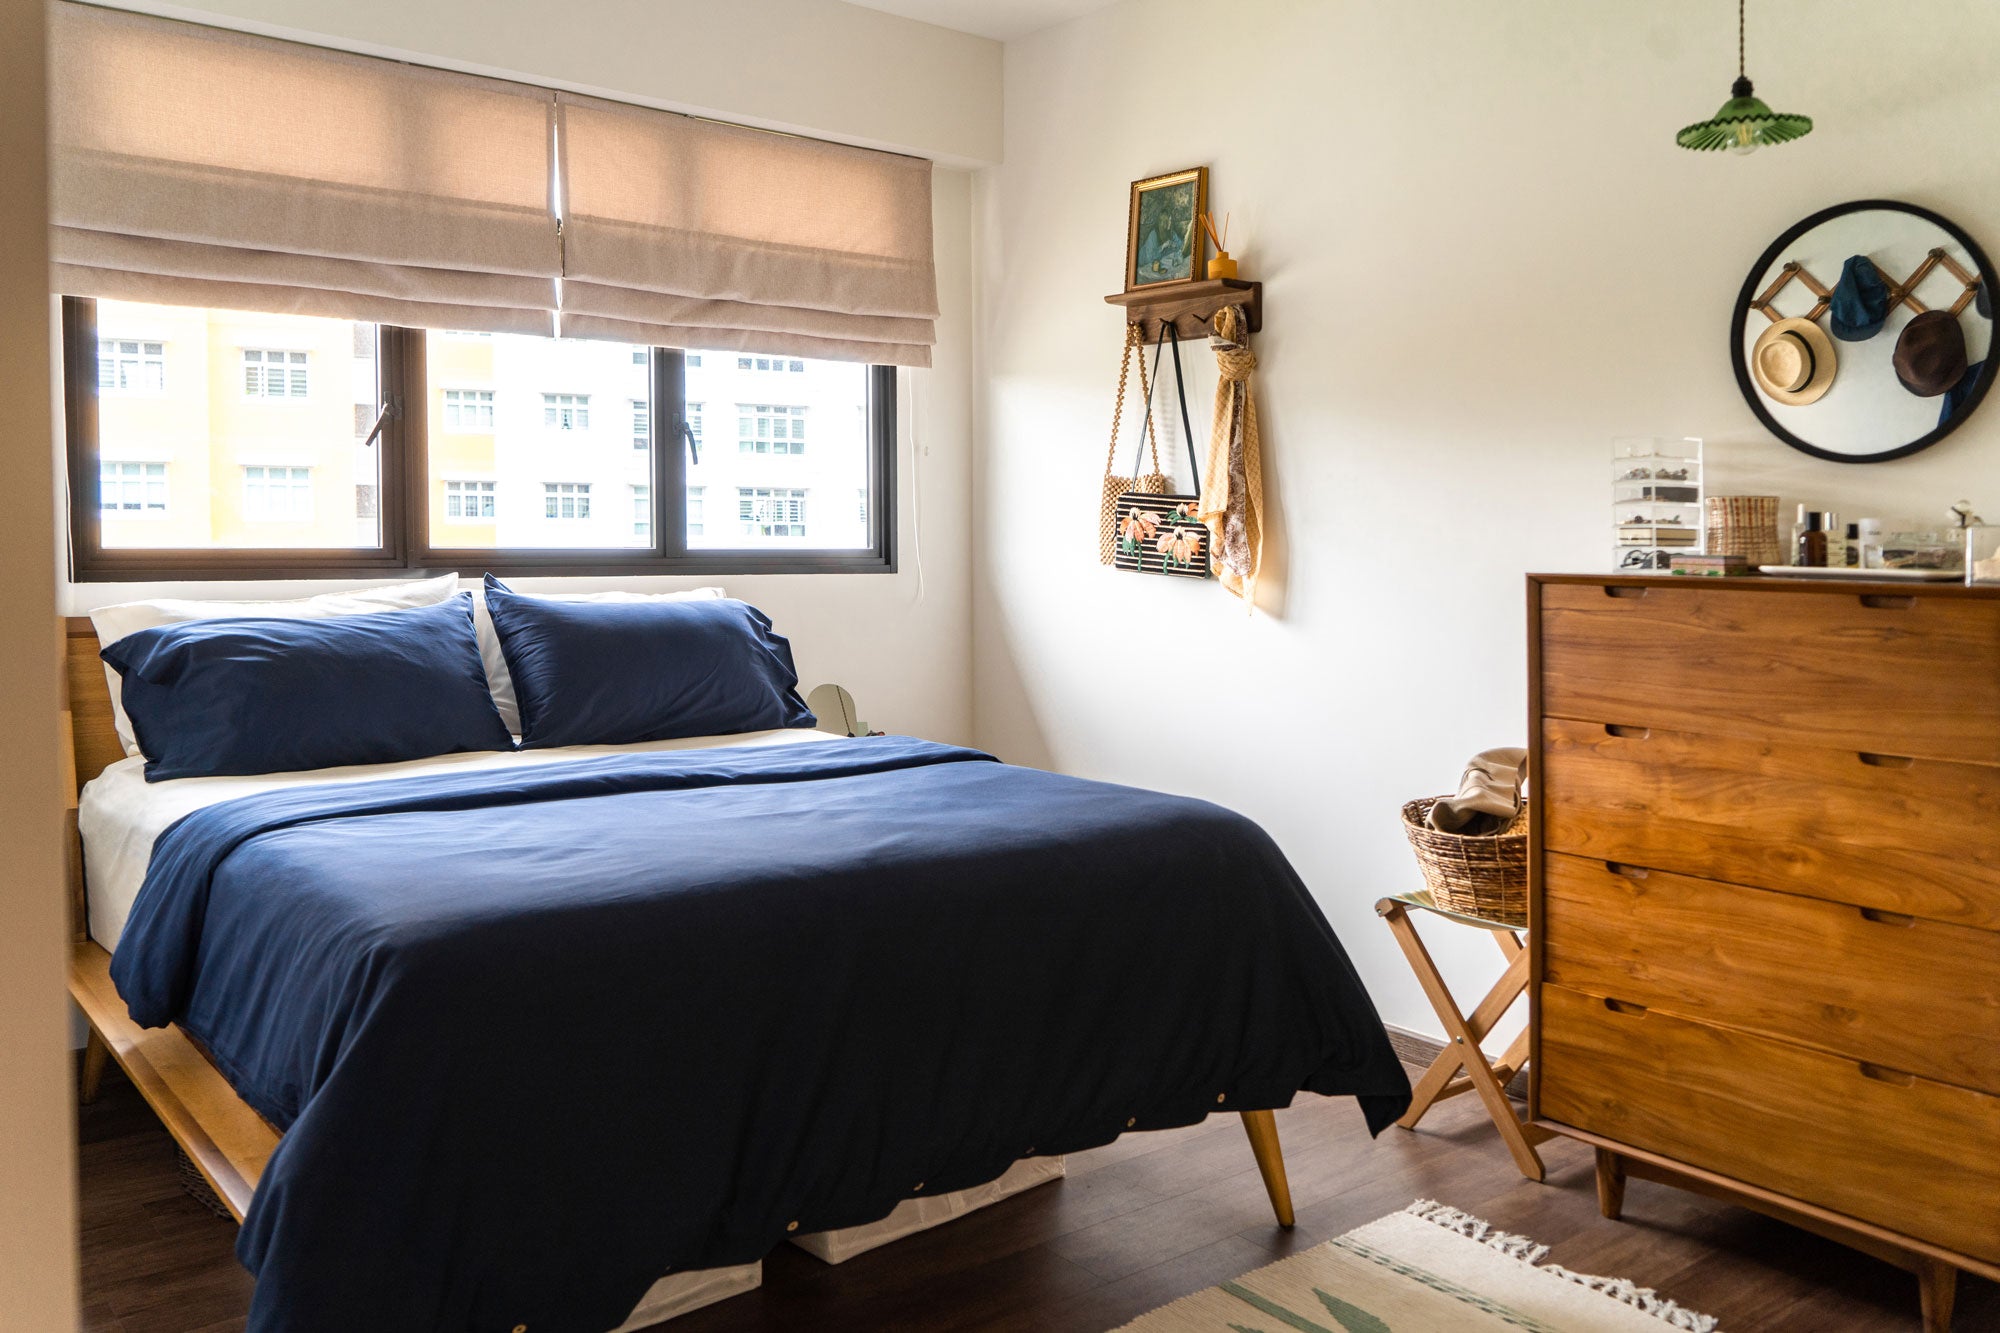 Sojao organic cotton bedding in 4 room hdb flat bedroom